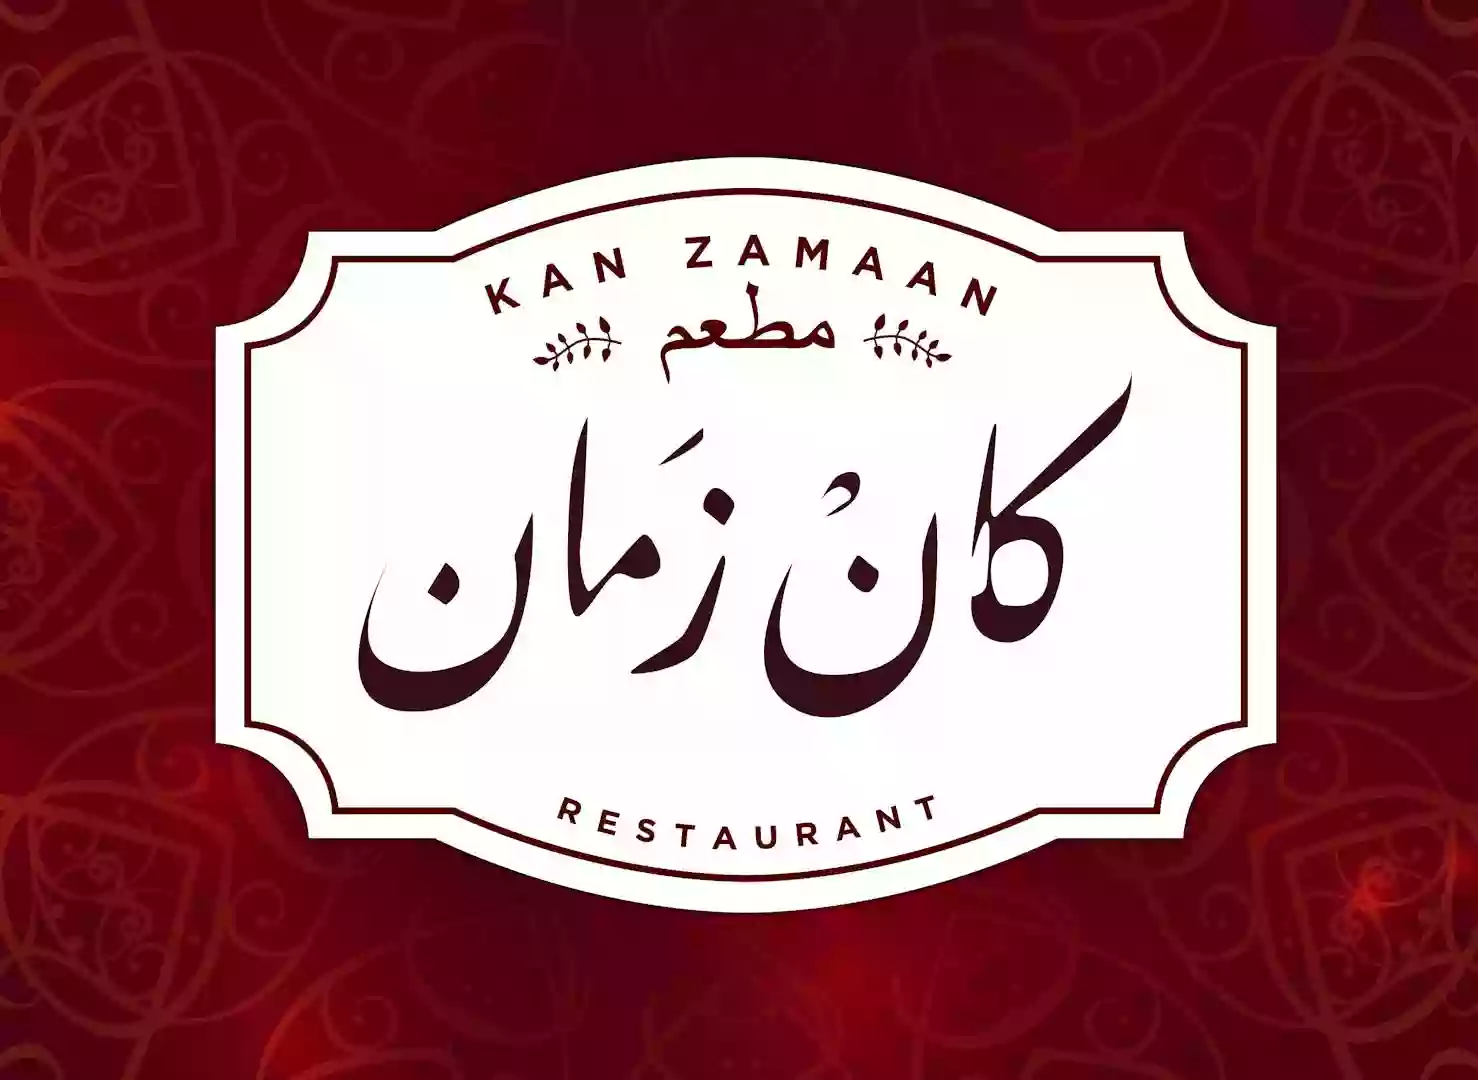 Kan Zamaan Restaurant